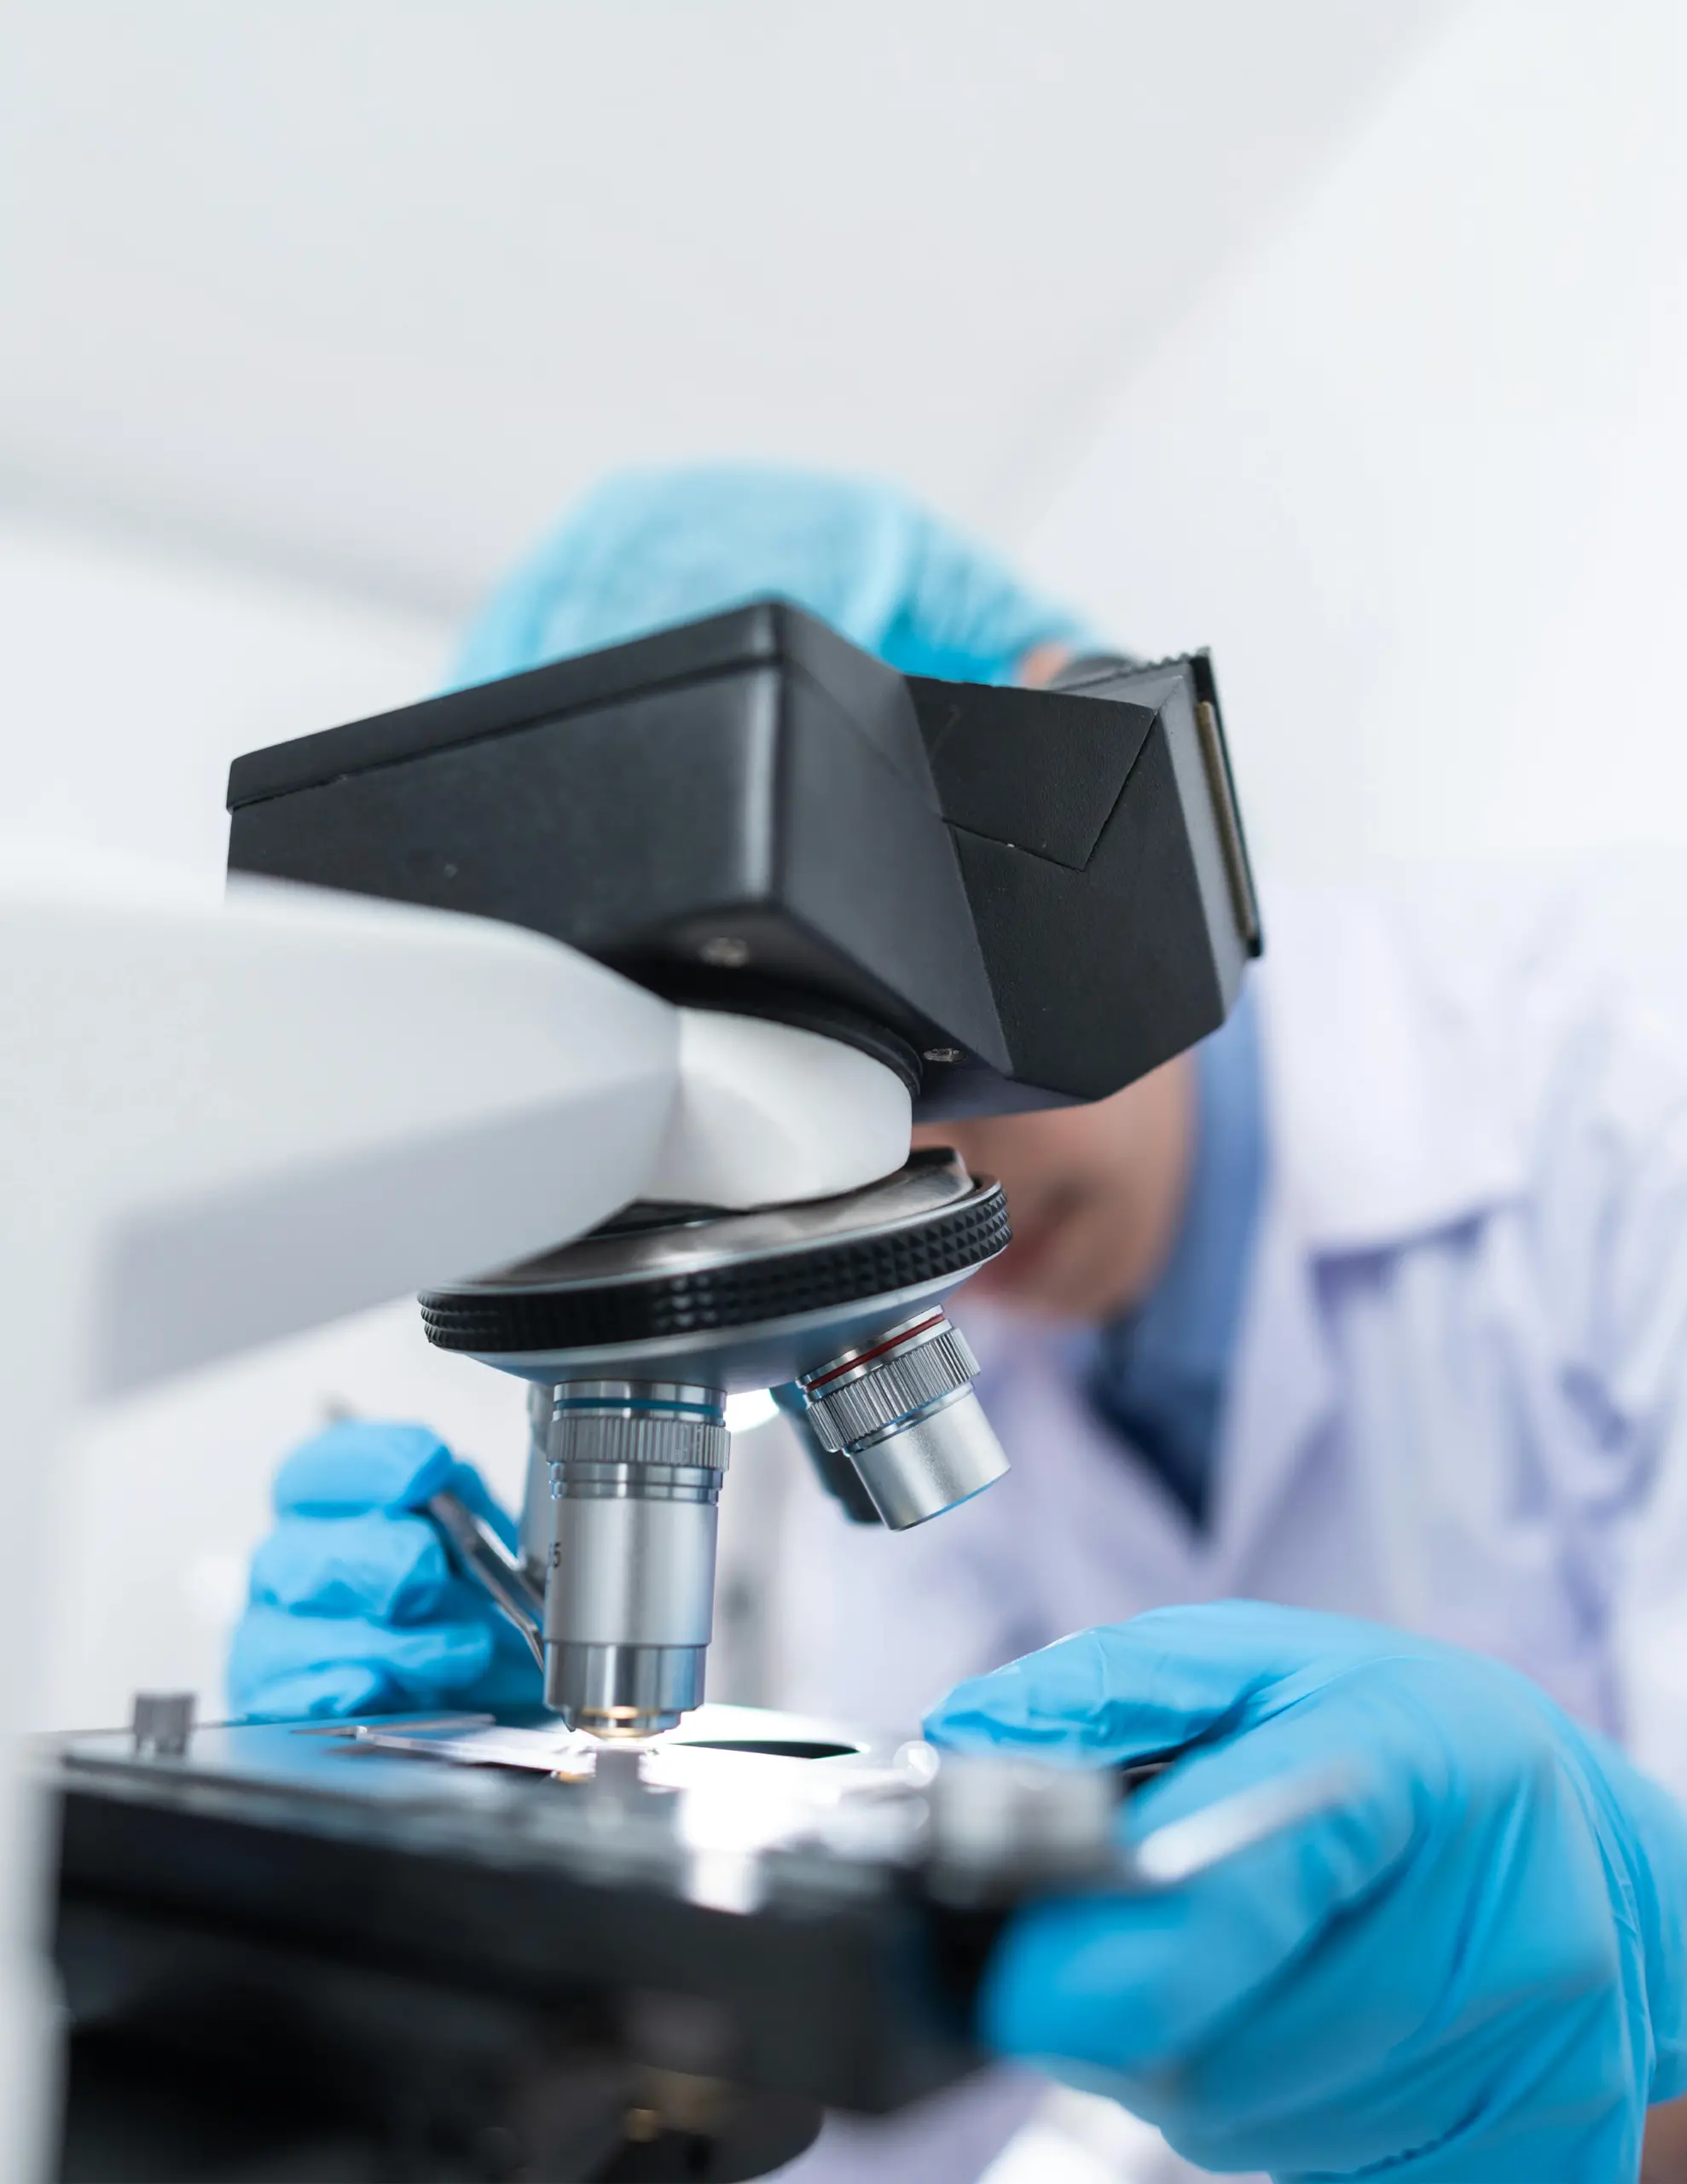 Scientist Using Microscope